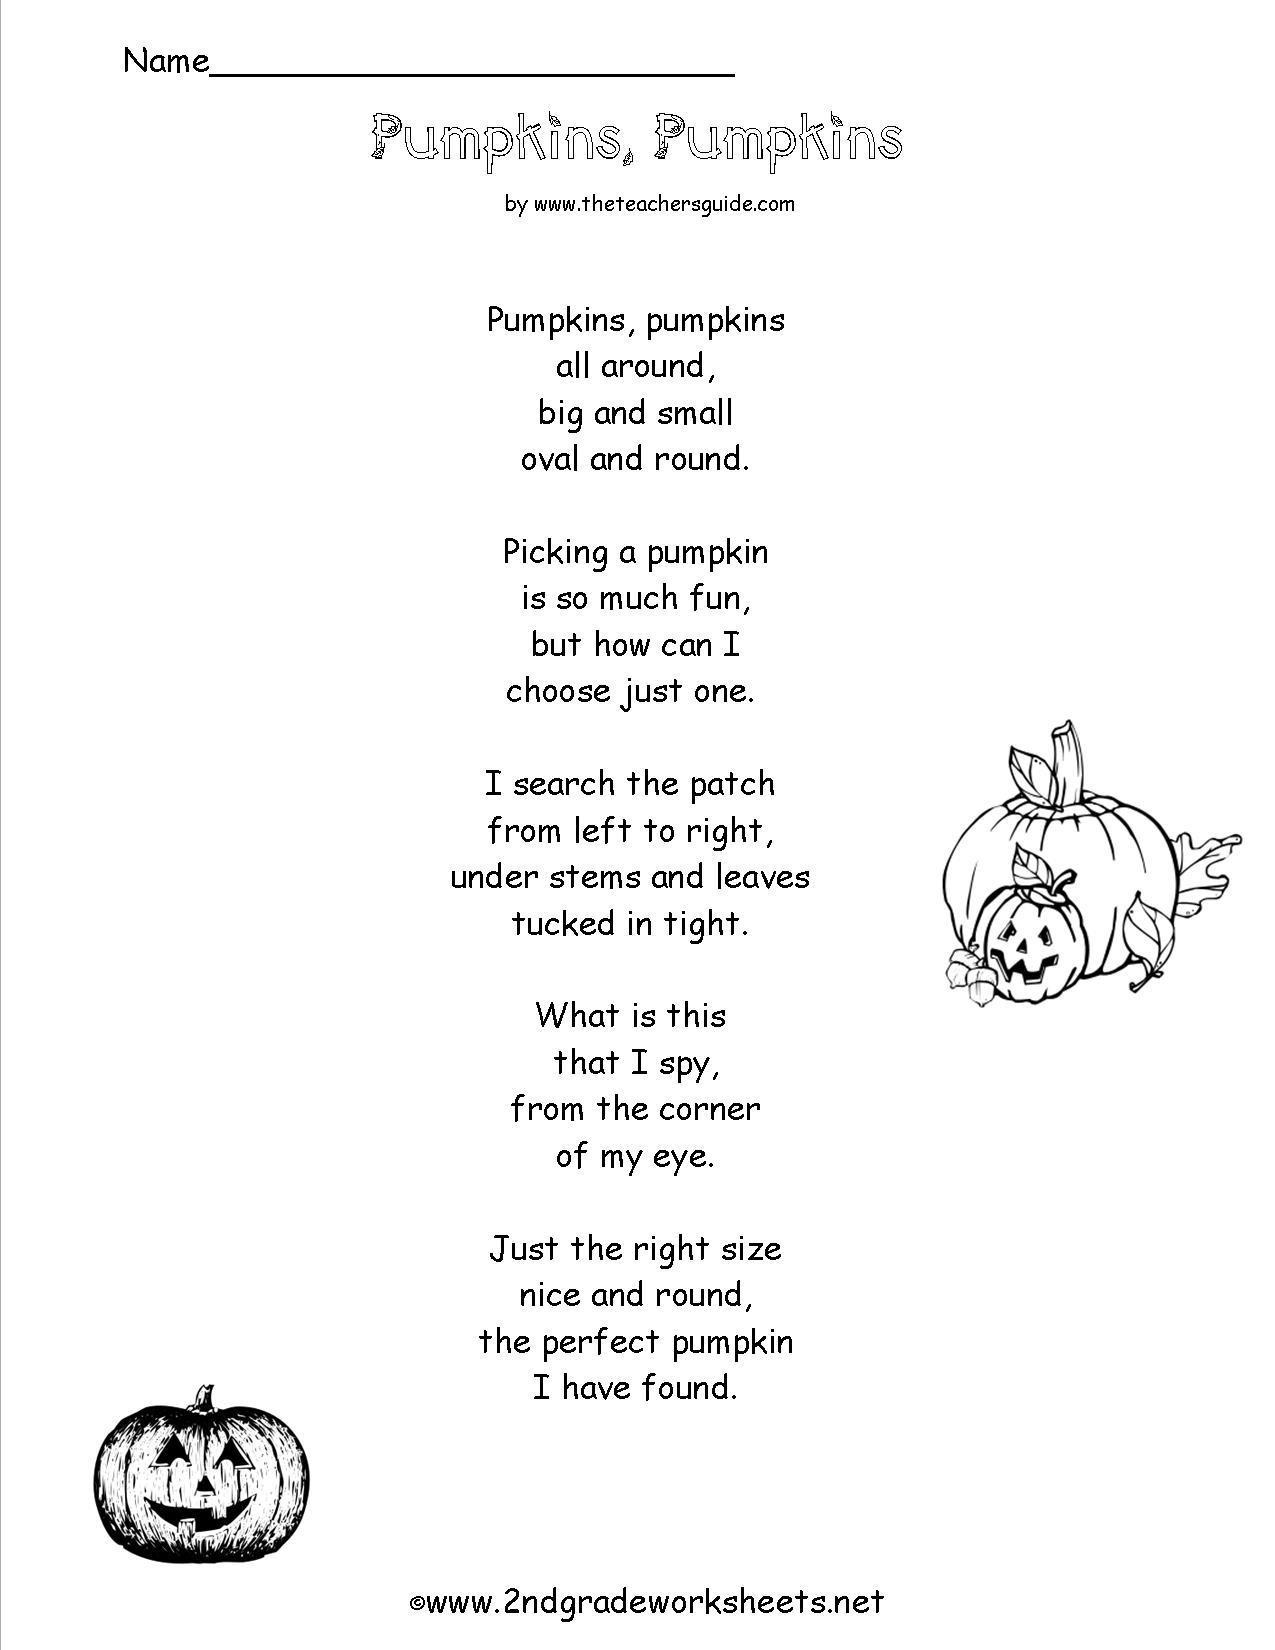 Halloween Worksheets and 2nd Grade Poem Image